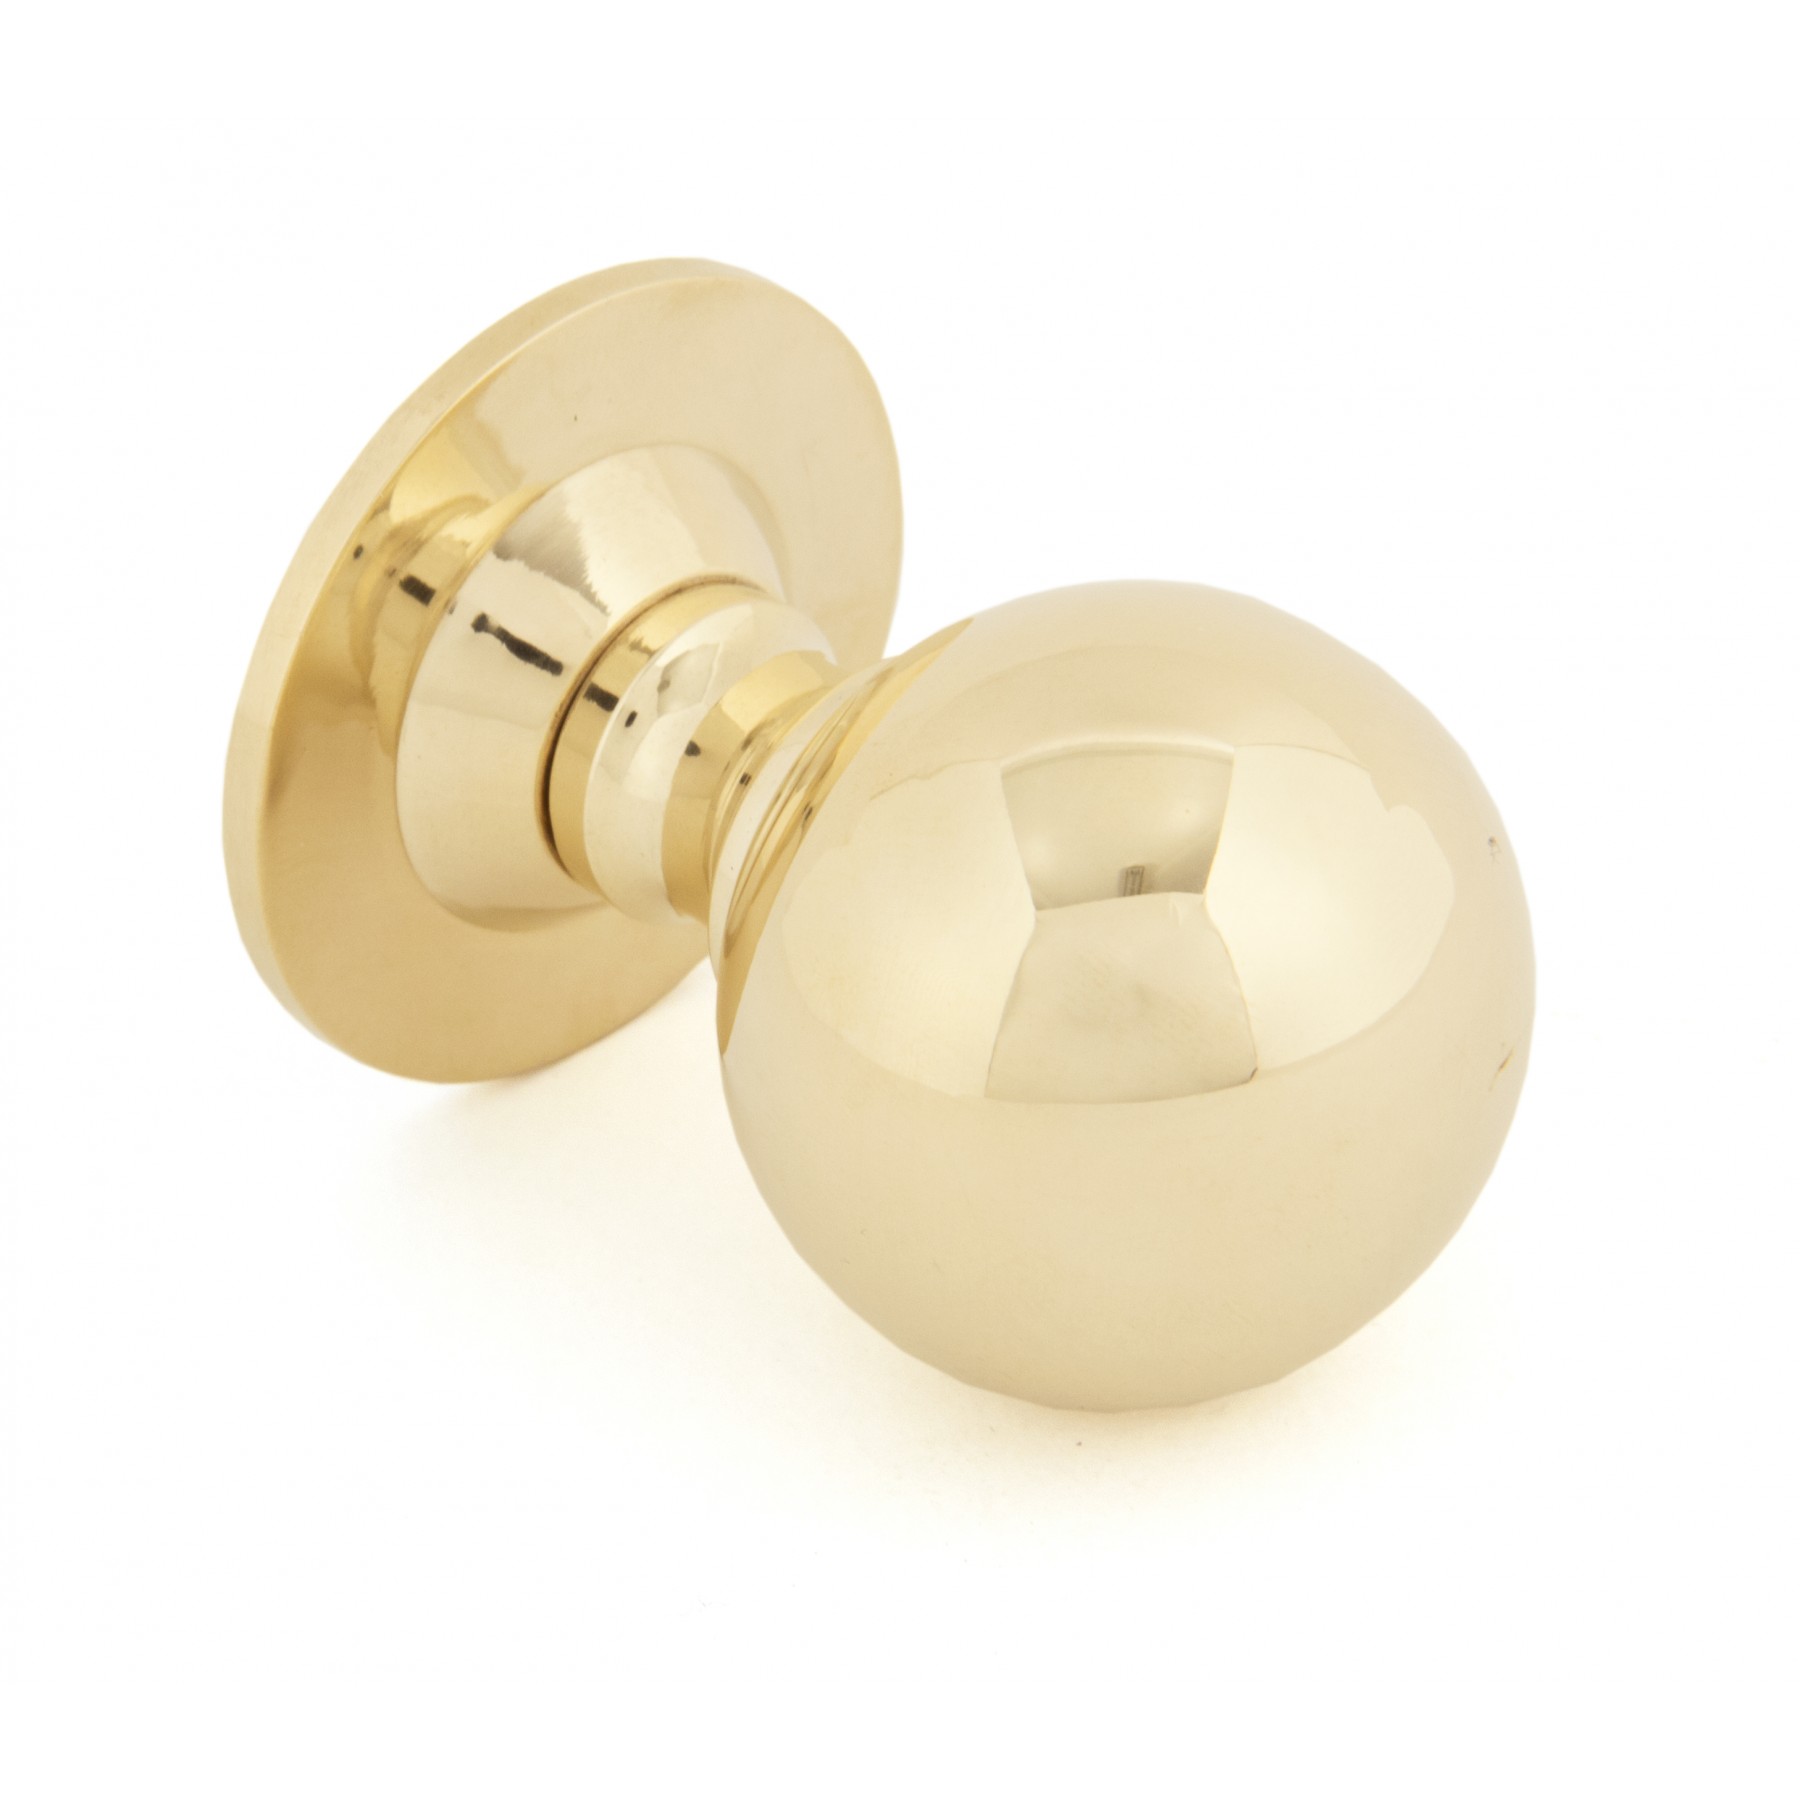 Polished brass cabinet knobs